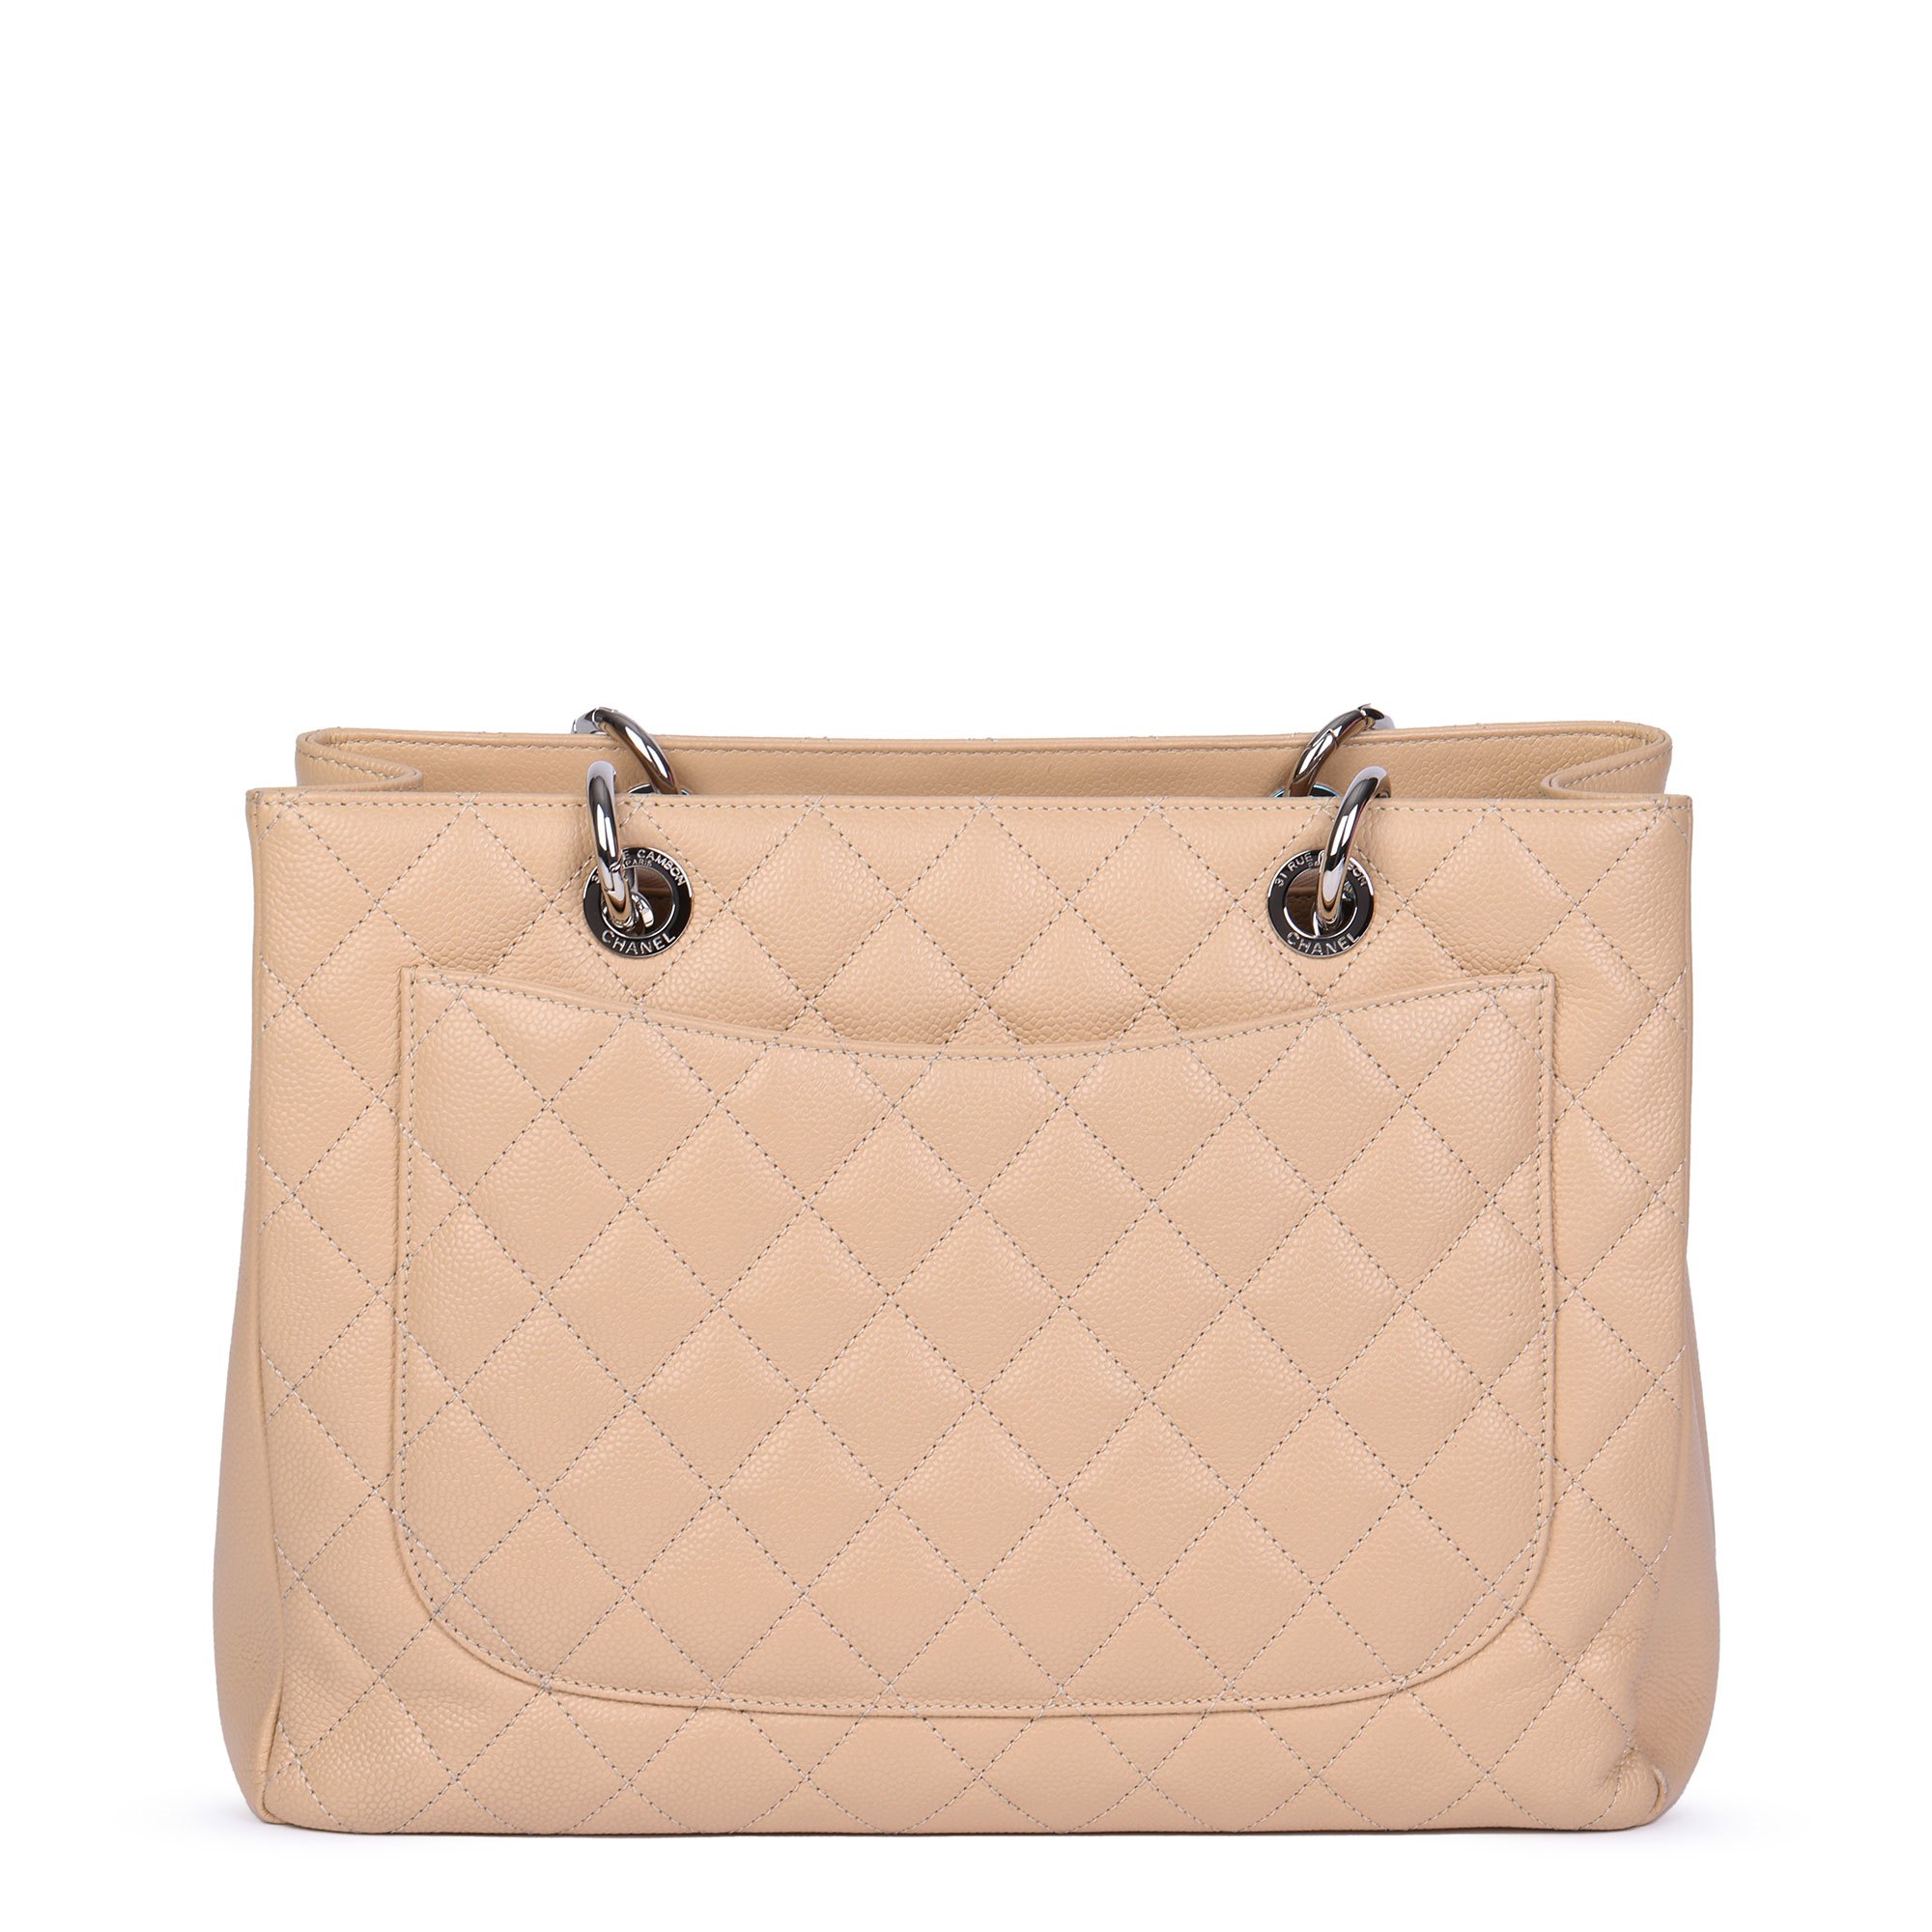 Chanel Grand Shopping Tote 2013 HB4039 | Second Hand Handbags